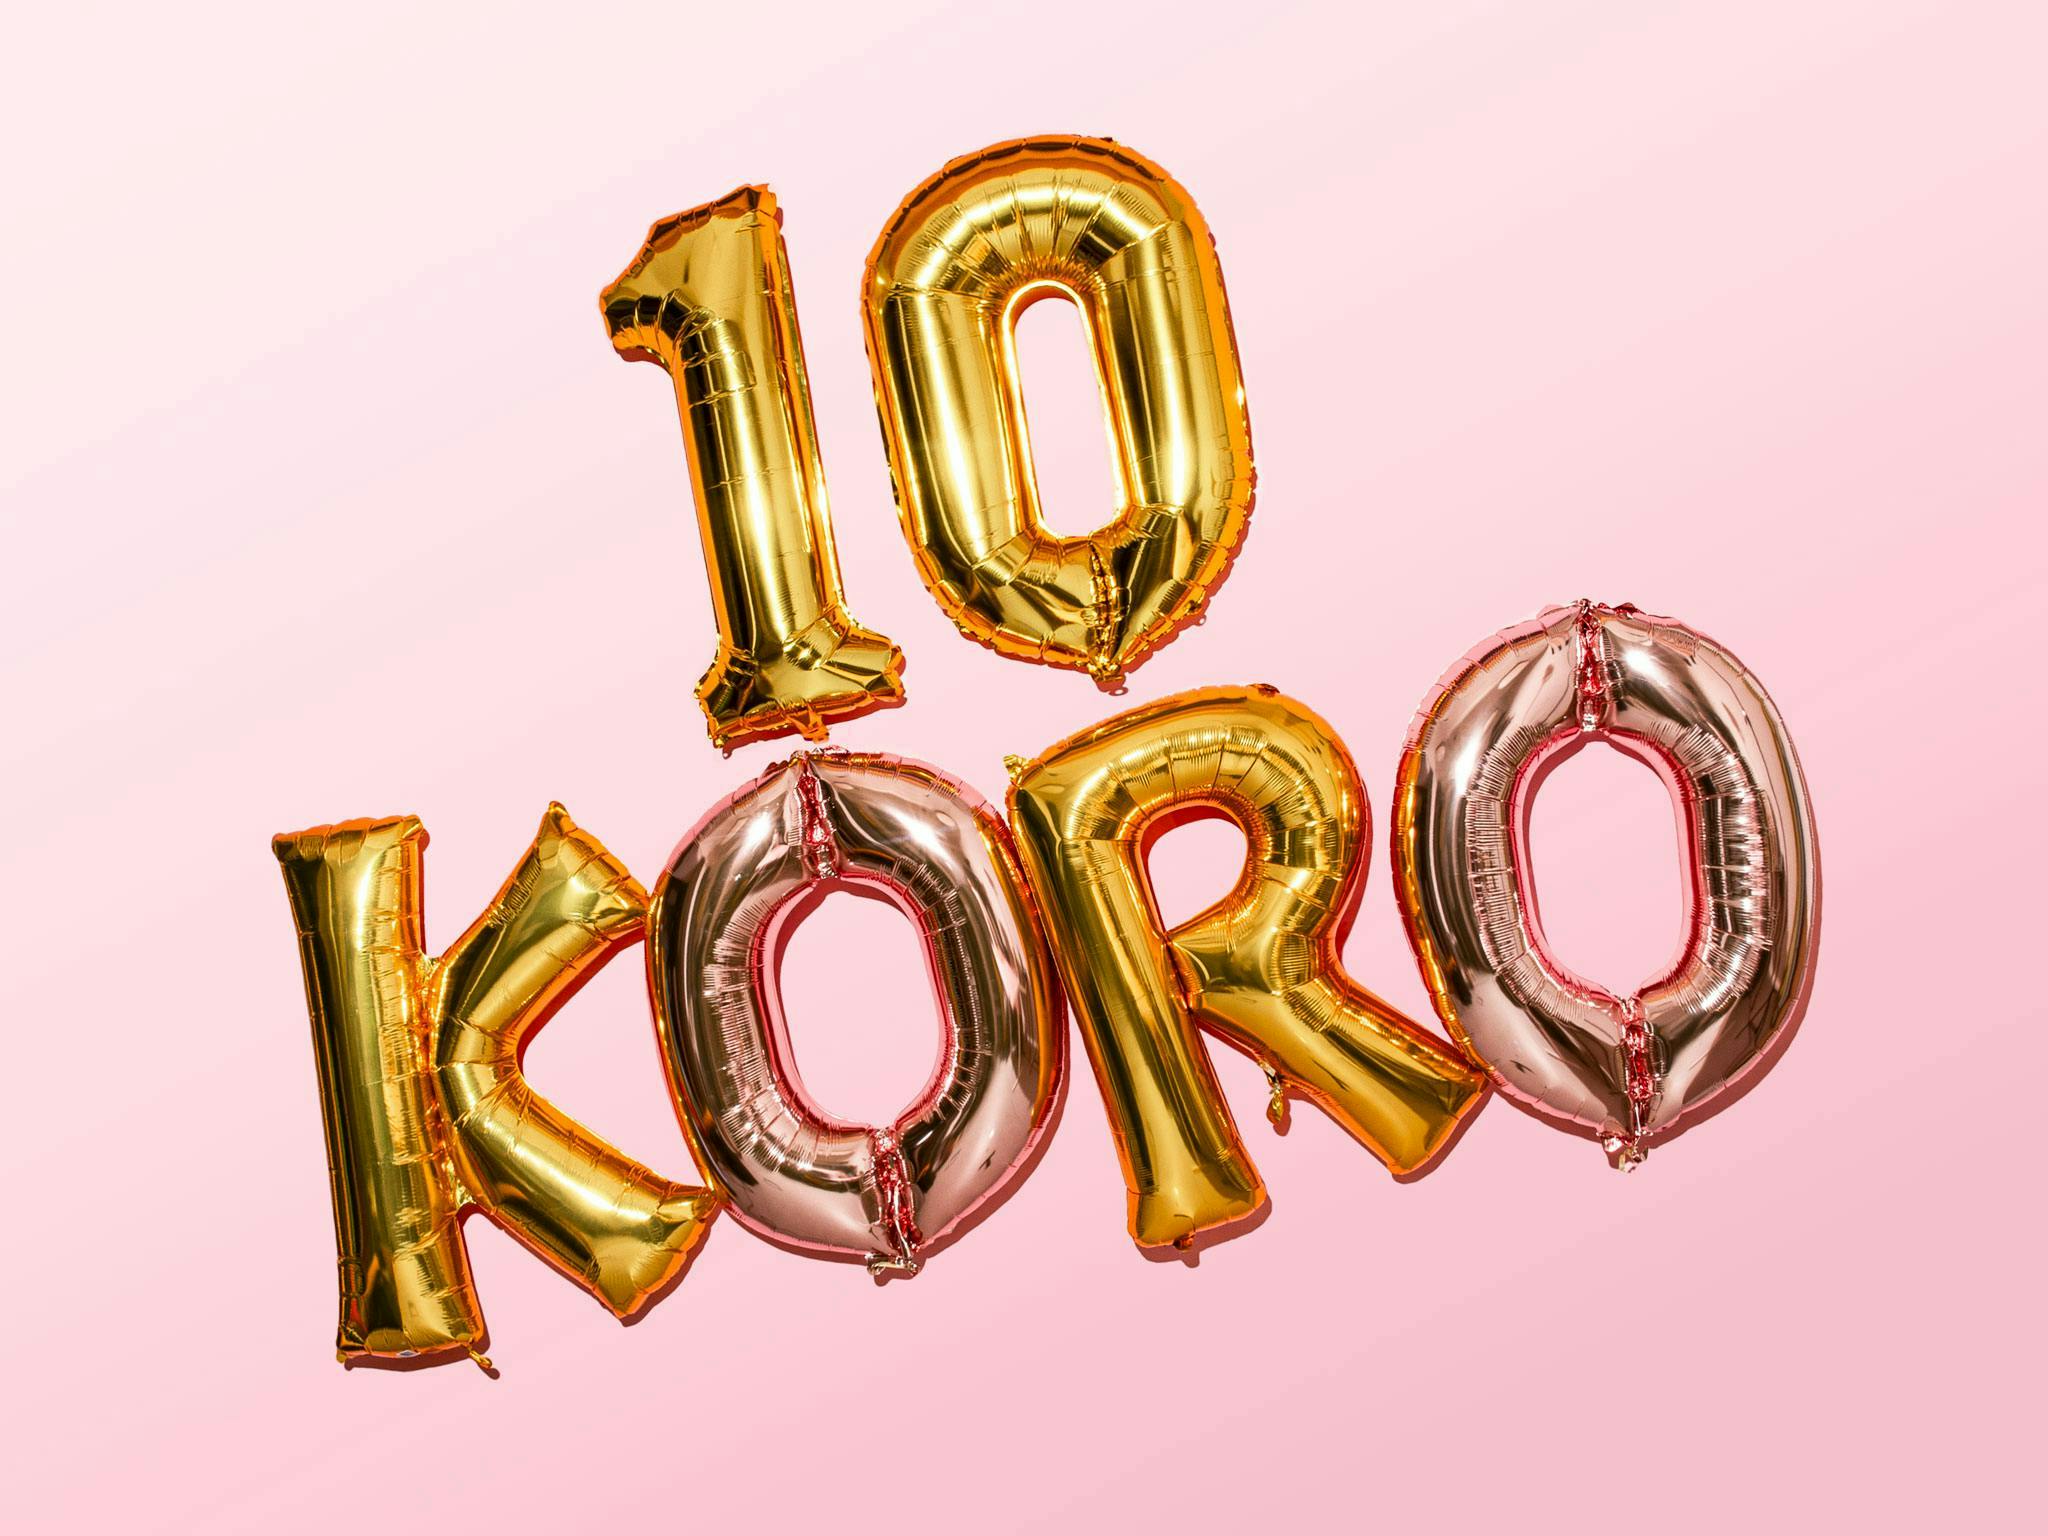 We have something to celebrate: 10 years of KoRo